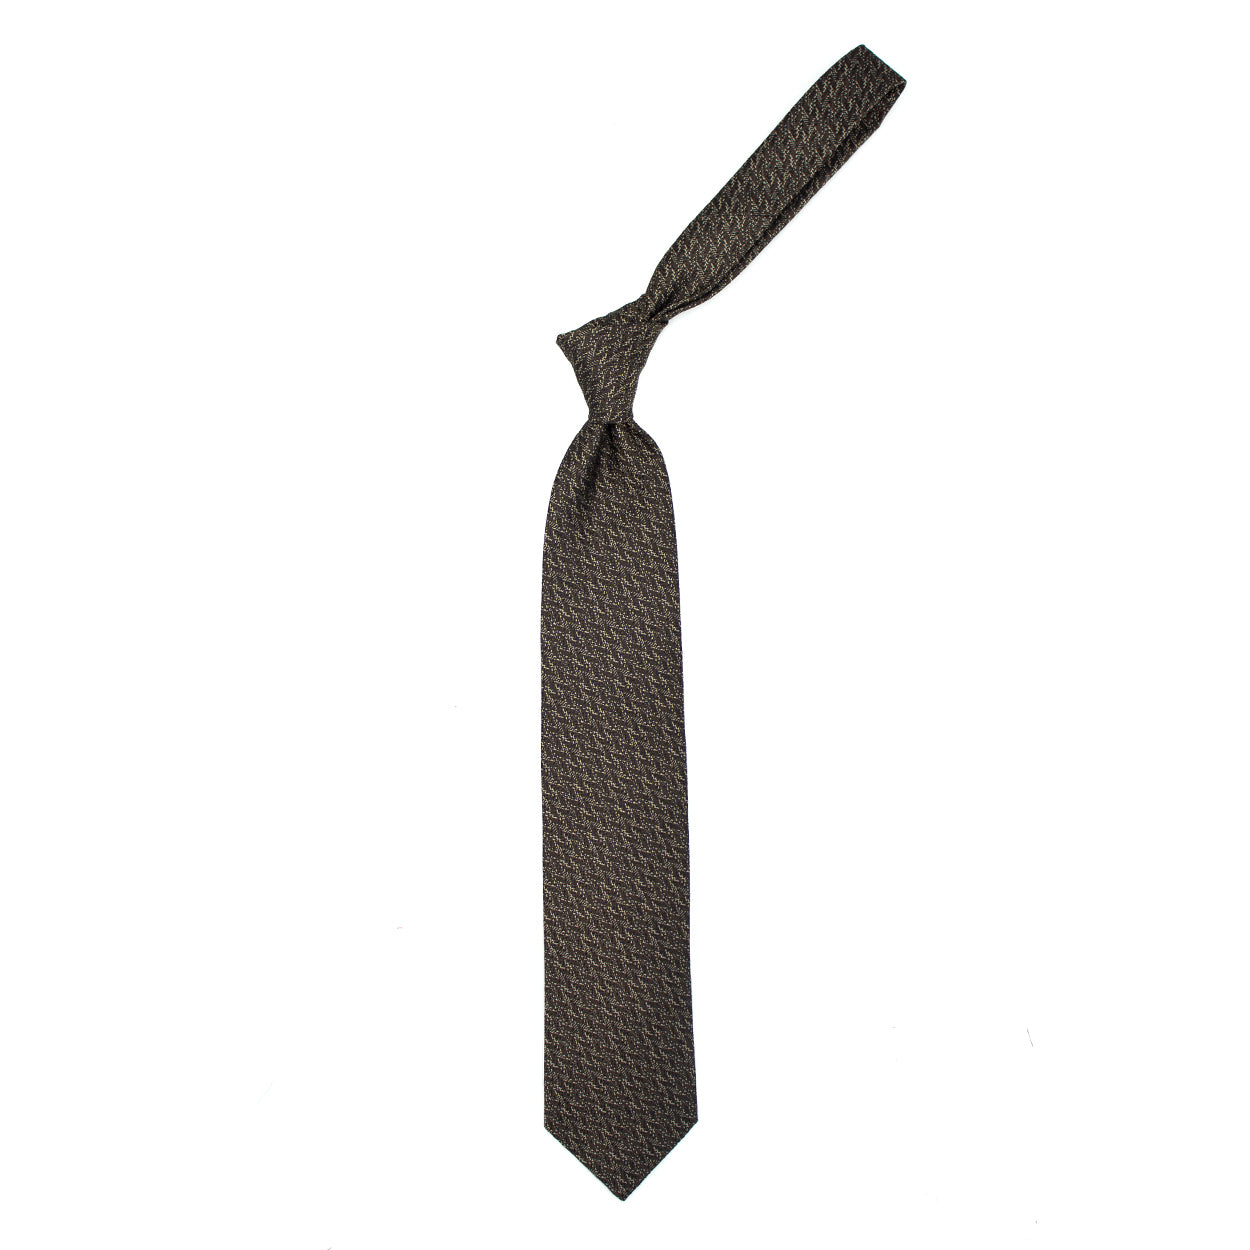 Cravatta tramata marrone e beige